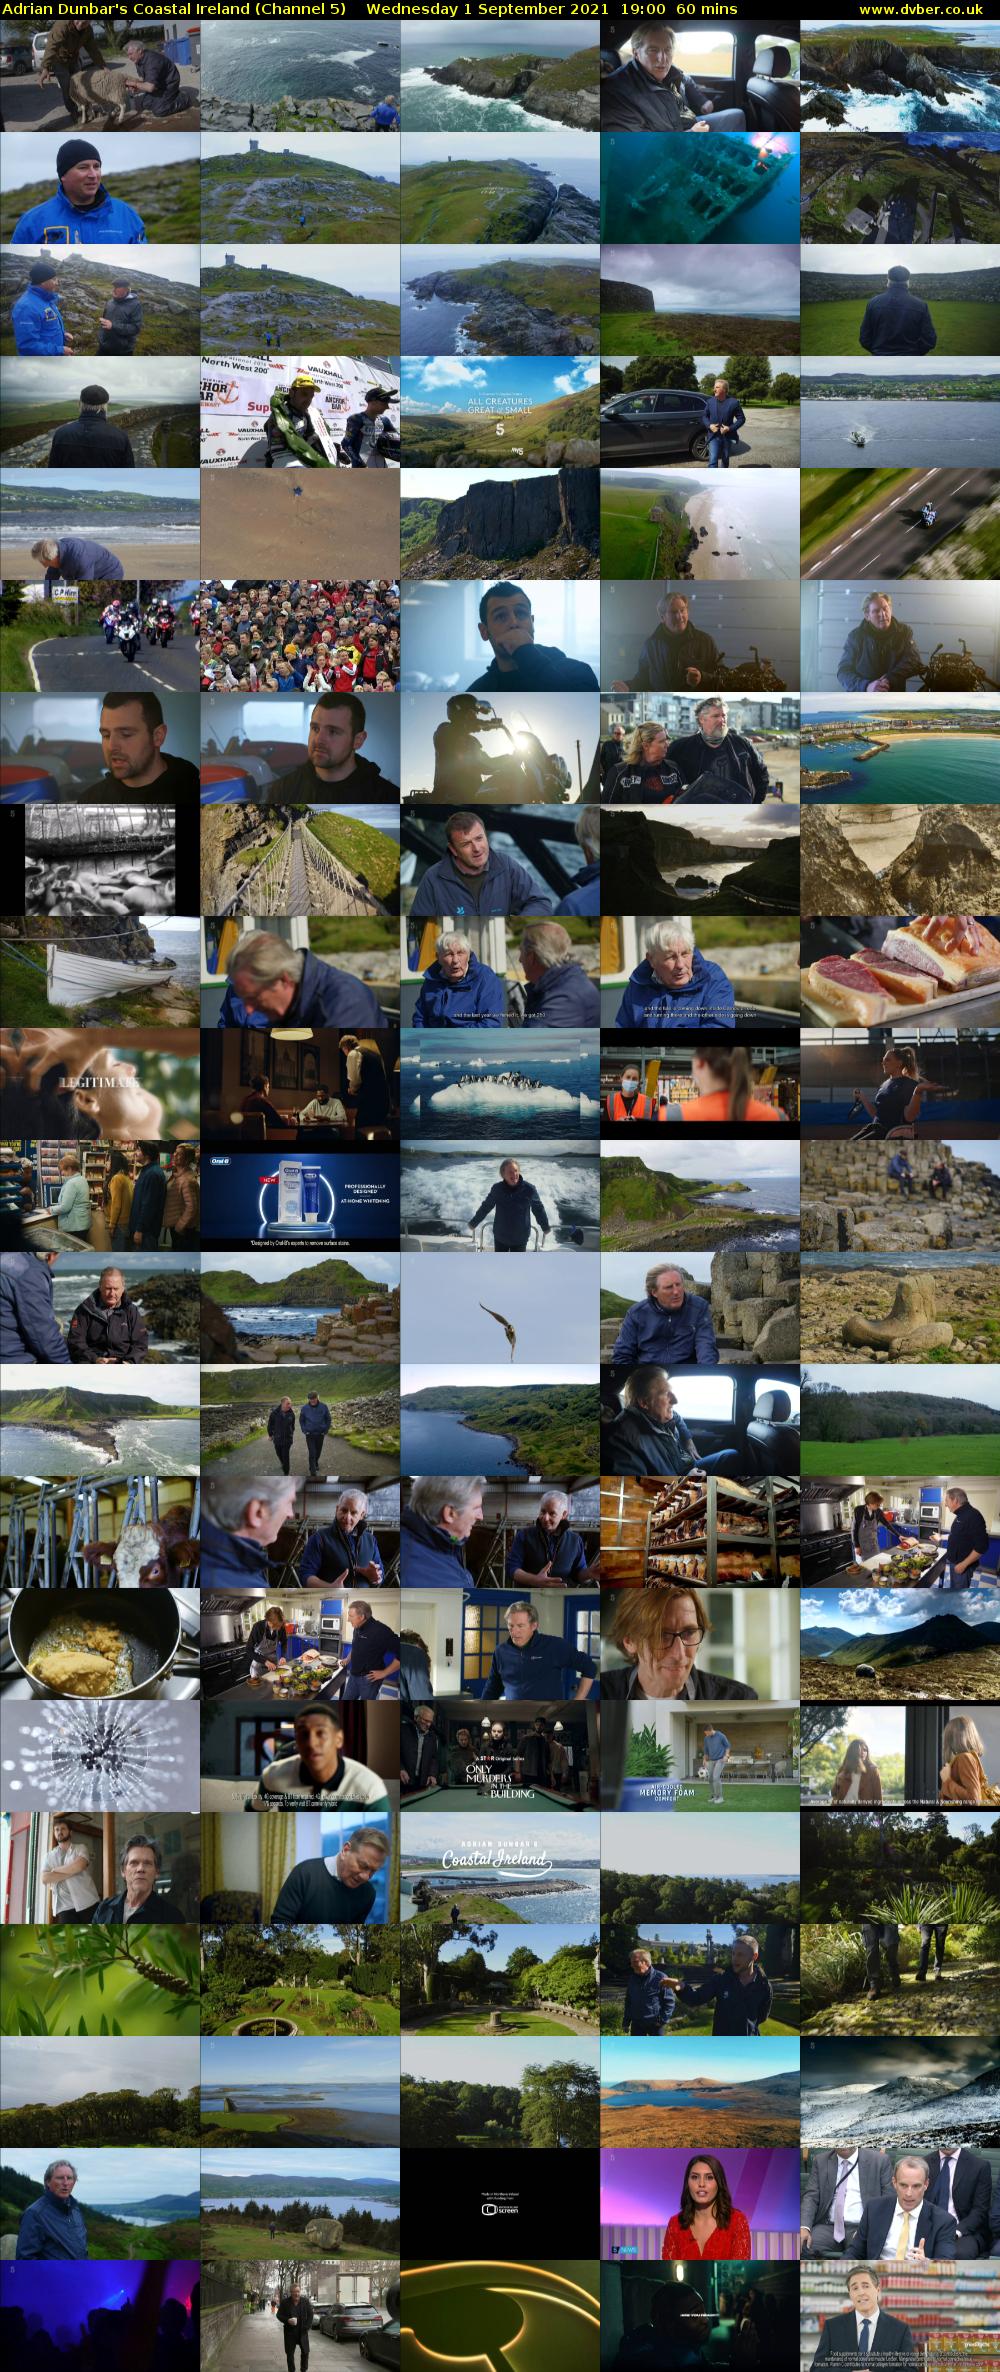 Adrian Dunbar's Coastal Ireland (Channel 5) Wednesday 1 September 2021 19:00 - 20:00